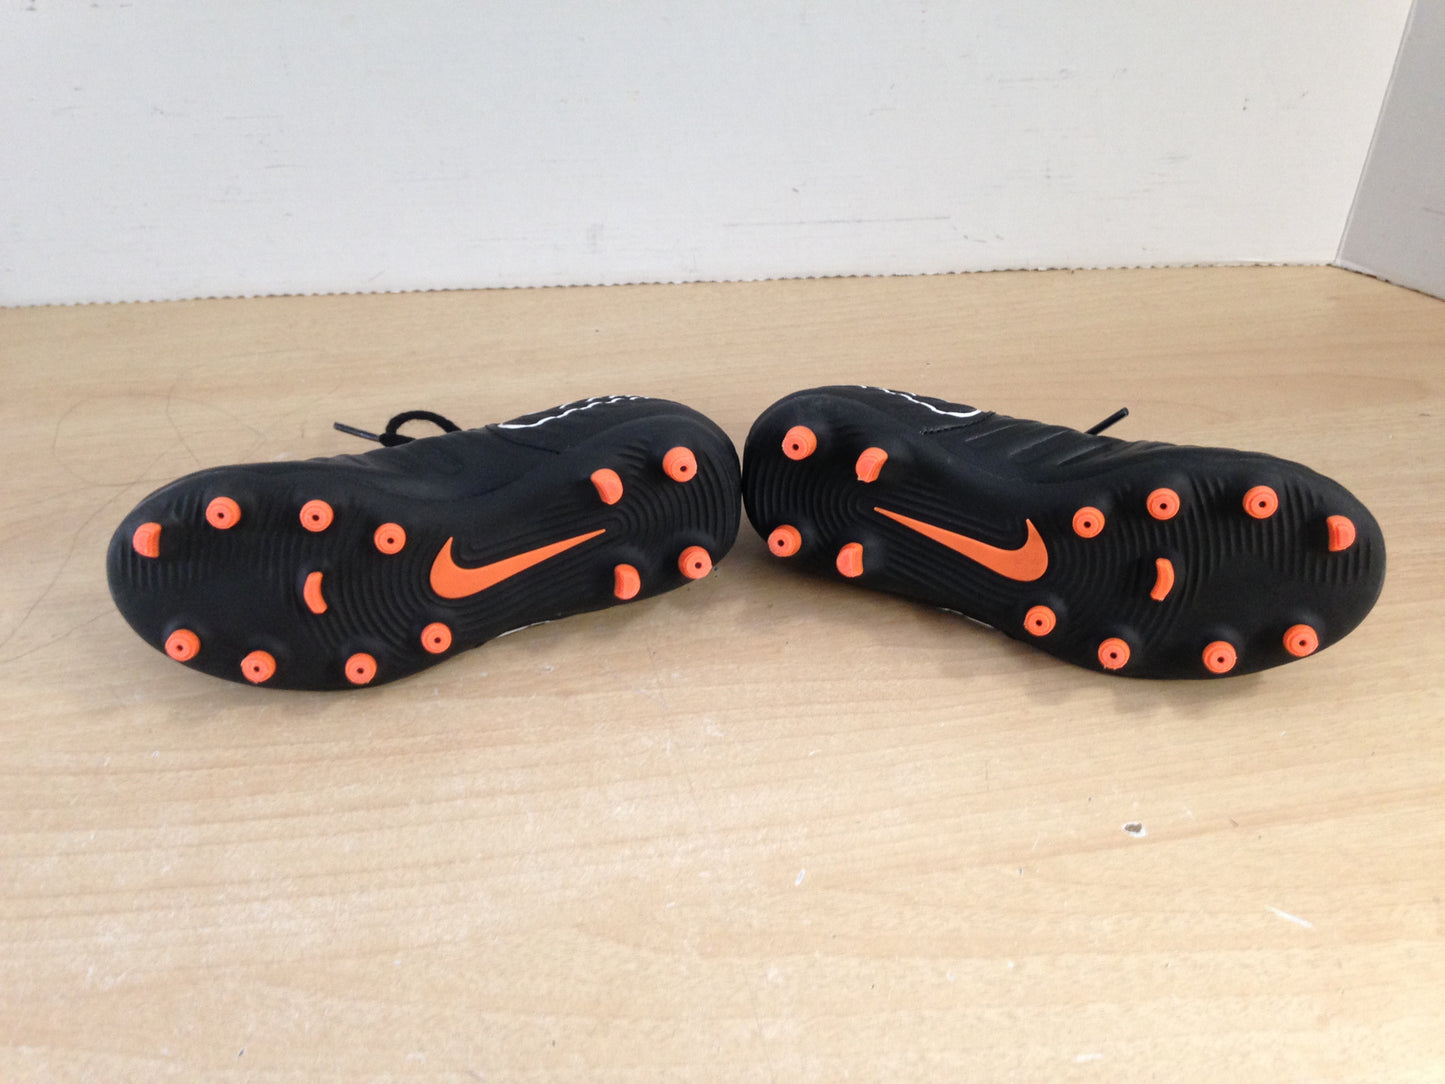 Soccer Shoes Cleats Child Size 11 Nike Tiempo Black Orange Excellent